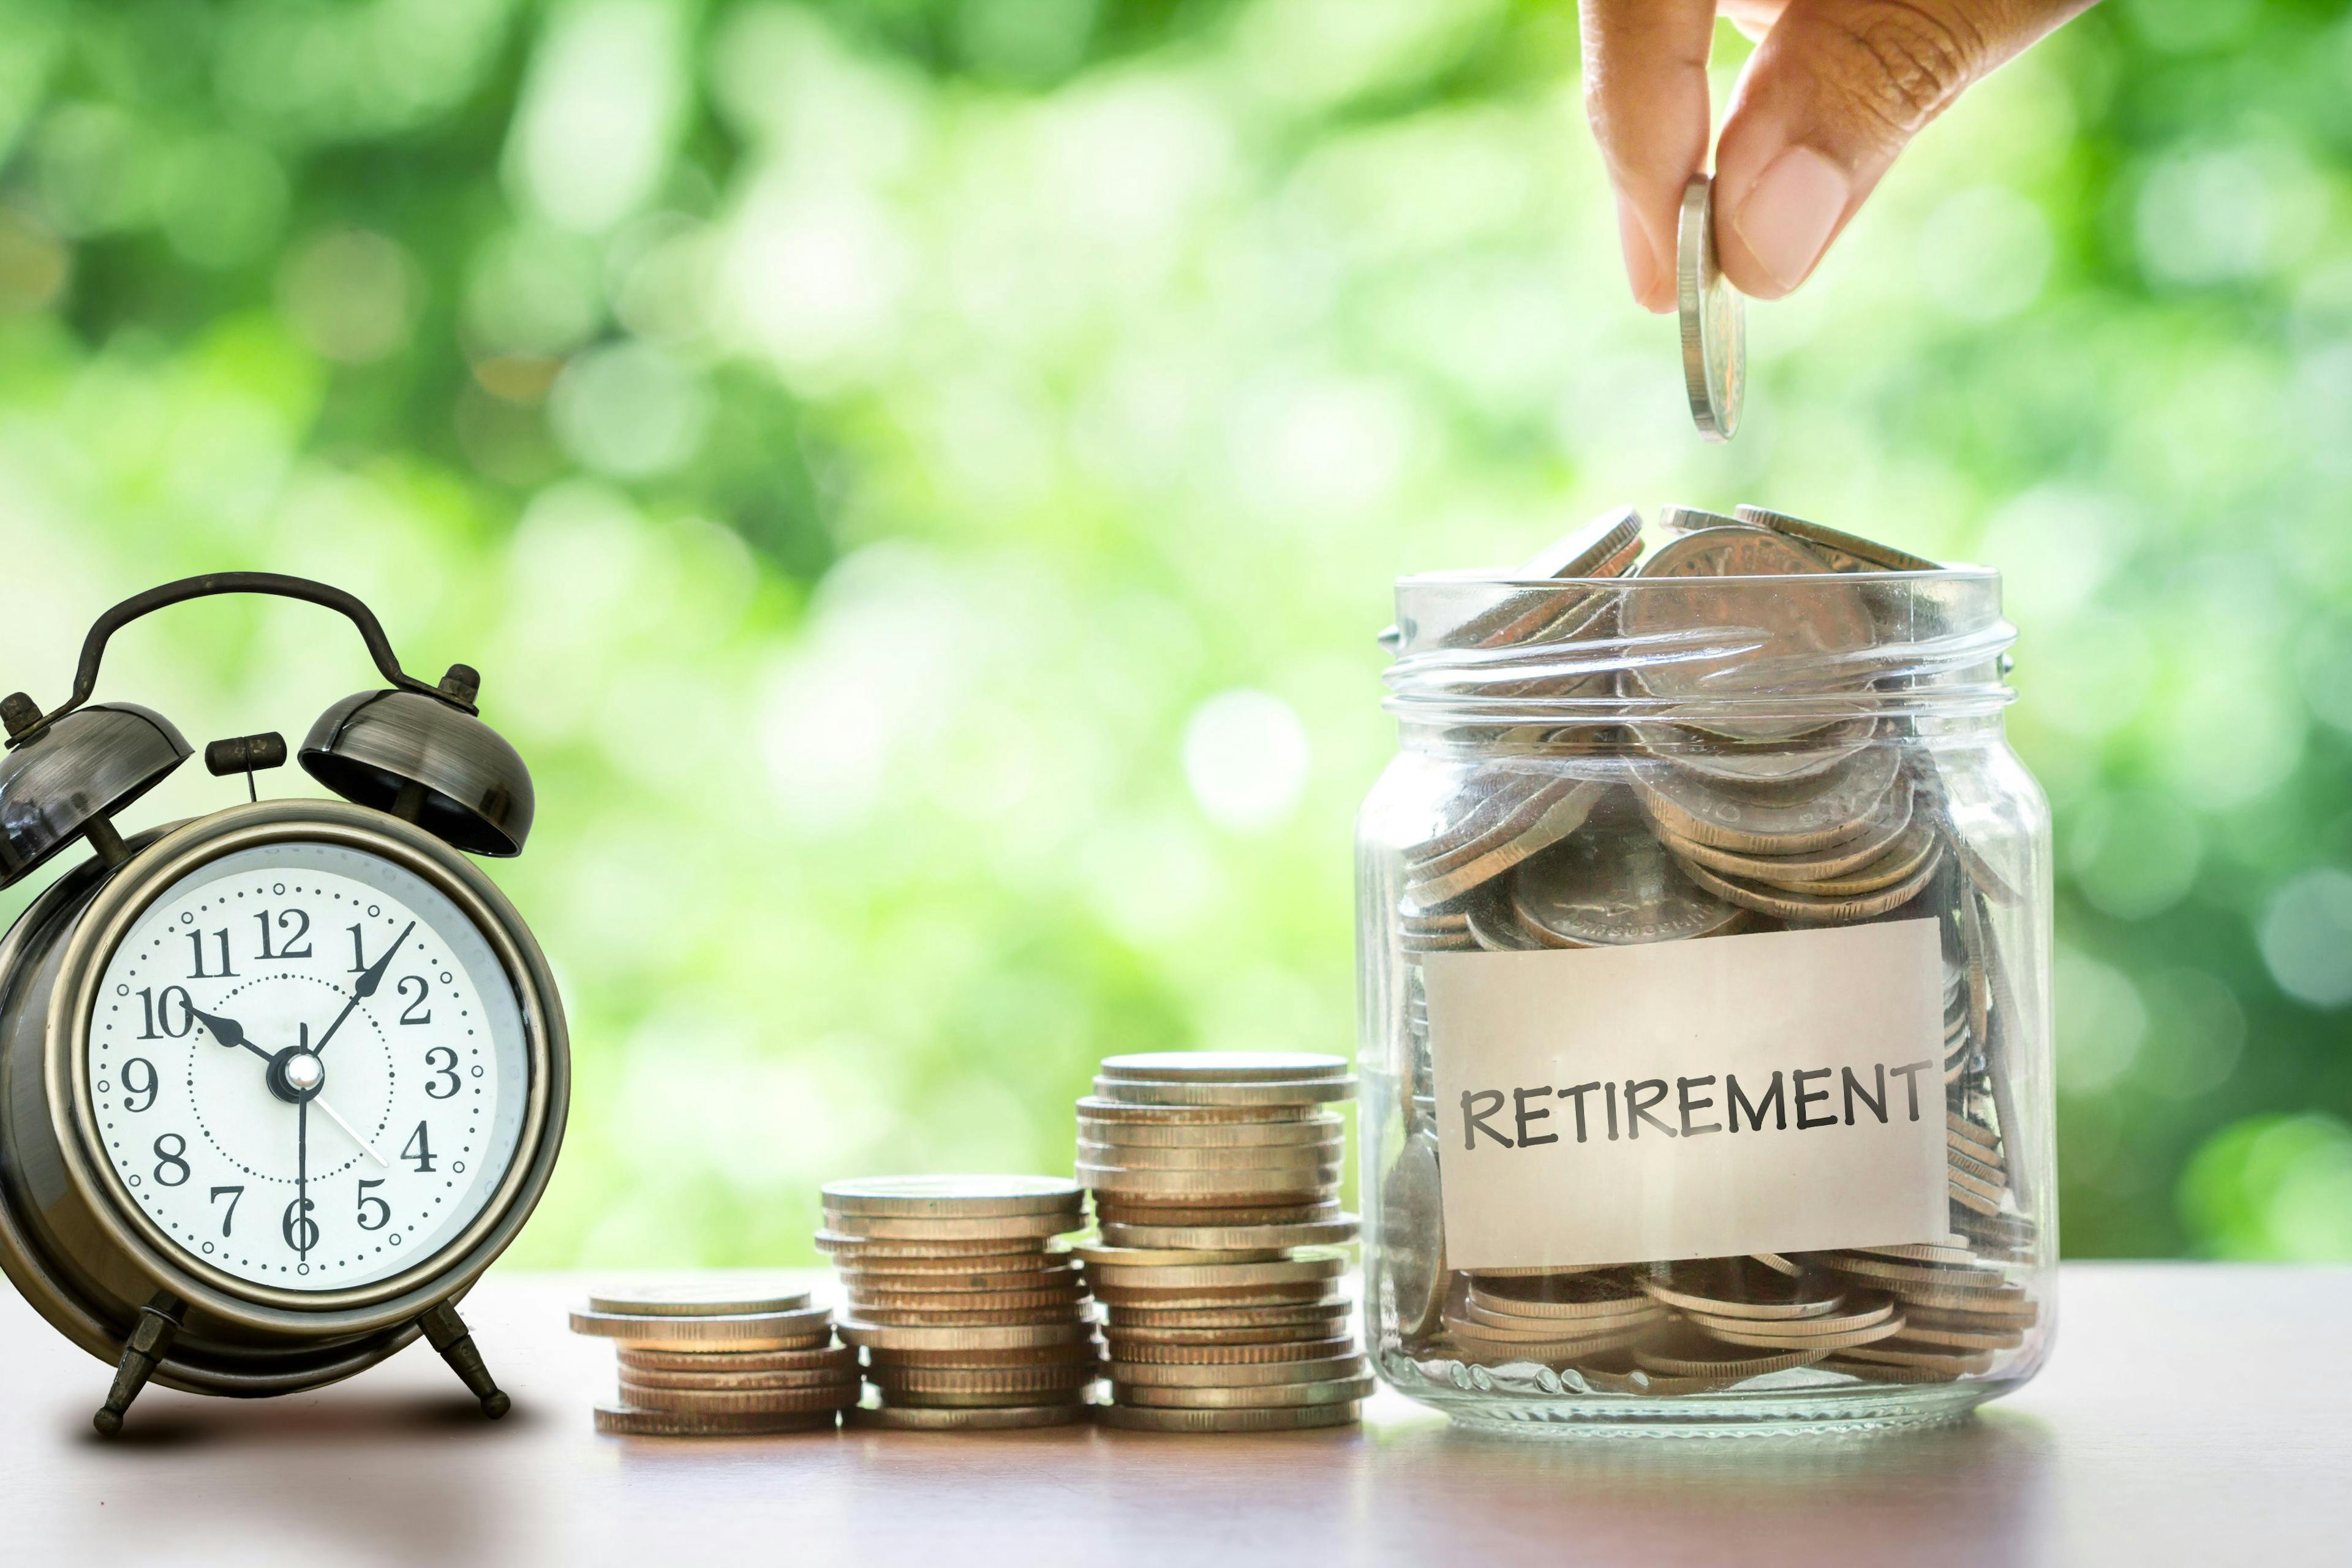 The dilemma: approaching retirement